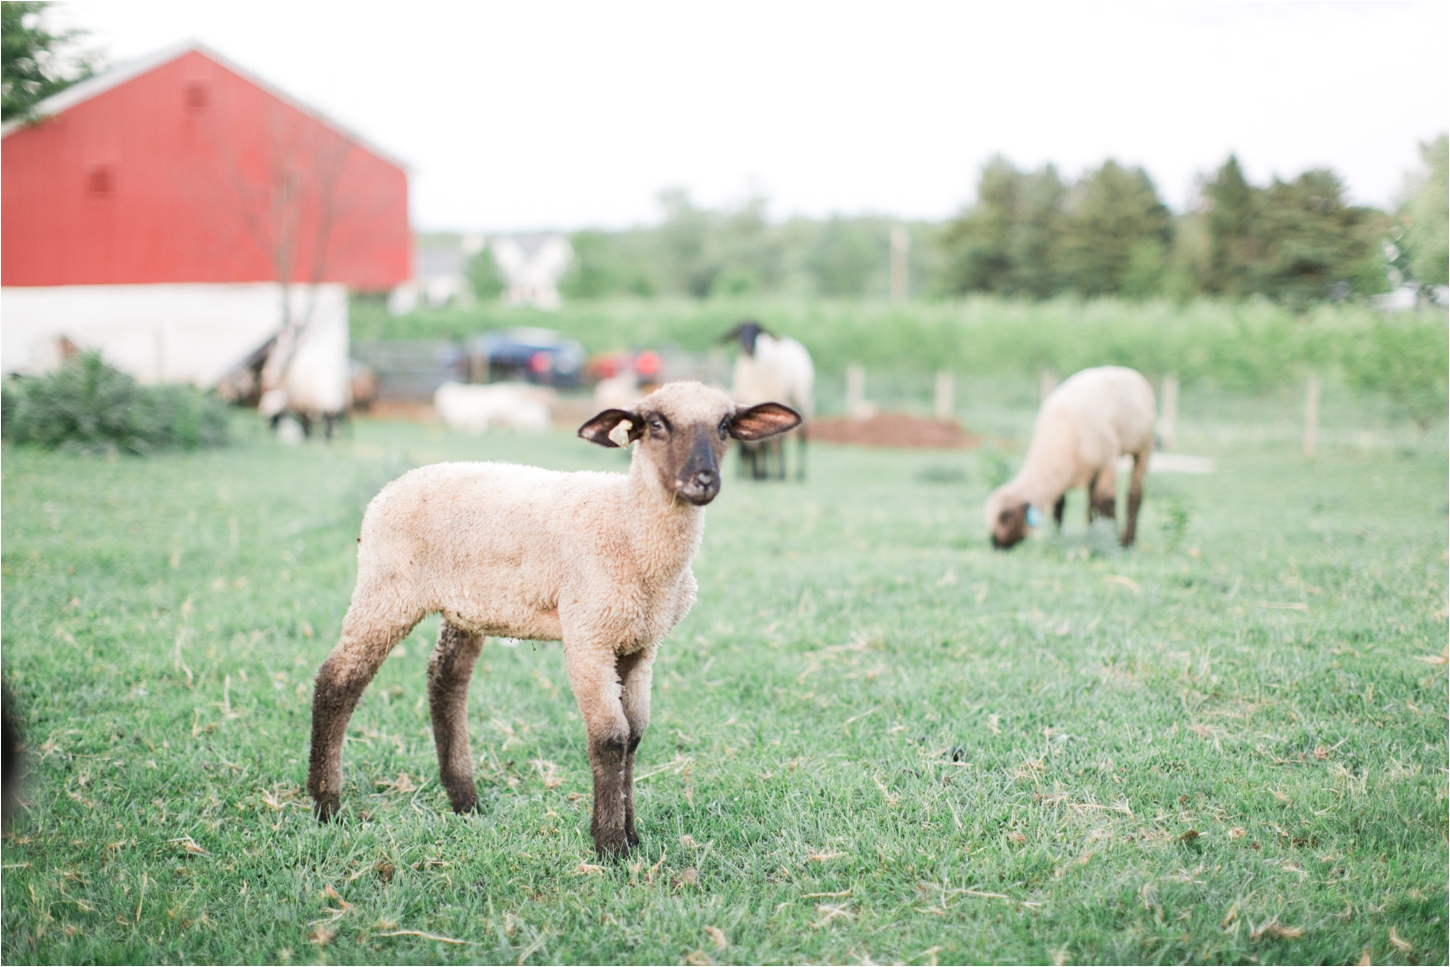 Sheep Farm Engagement Session Inspiration by Pennsylvania Wedding Photographer Brianna Wilbur